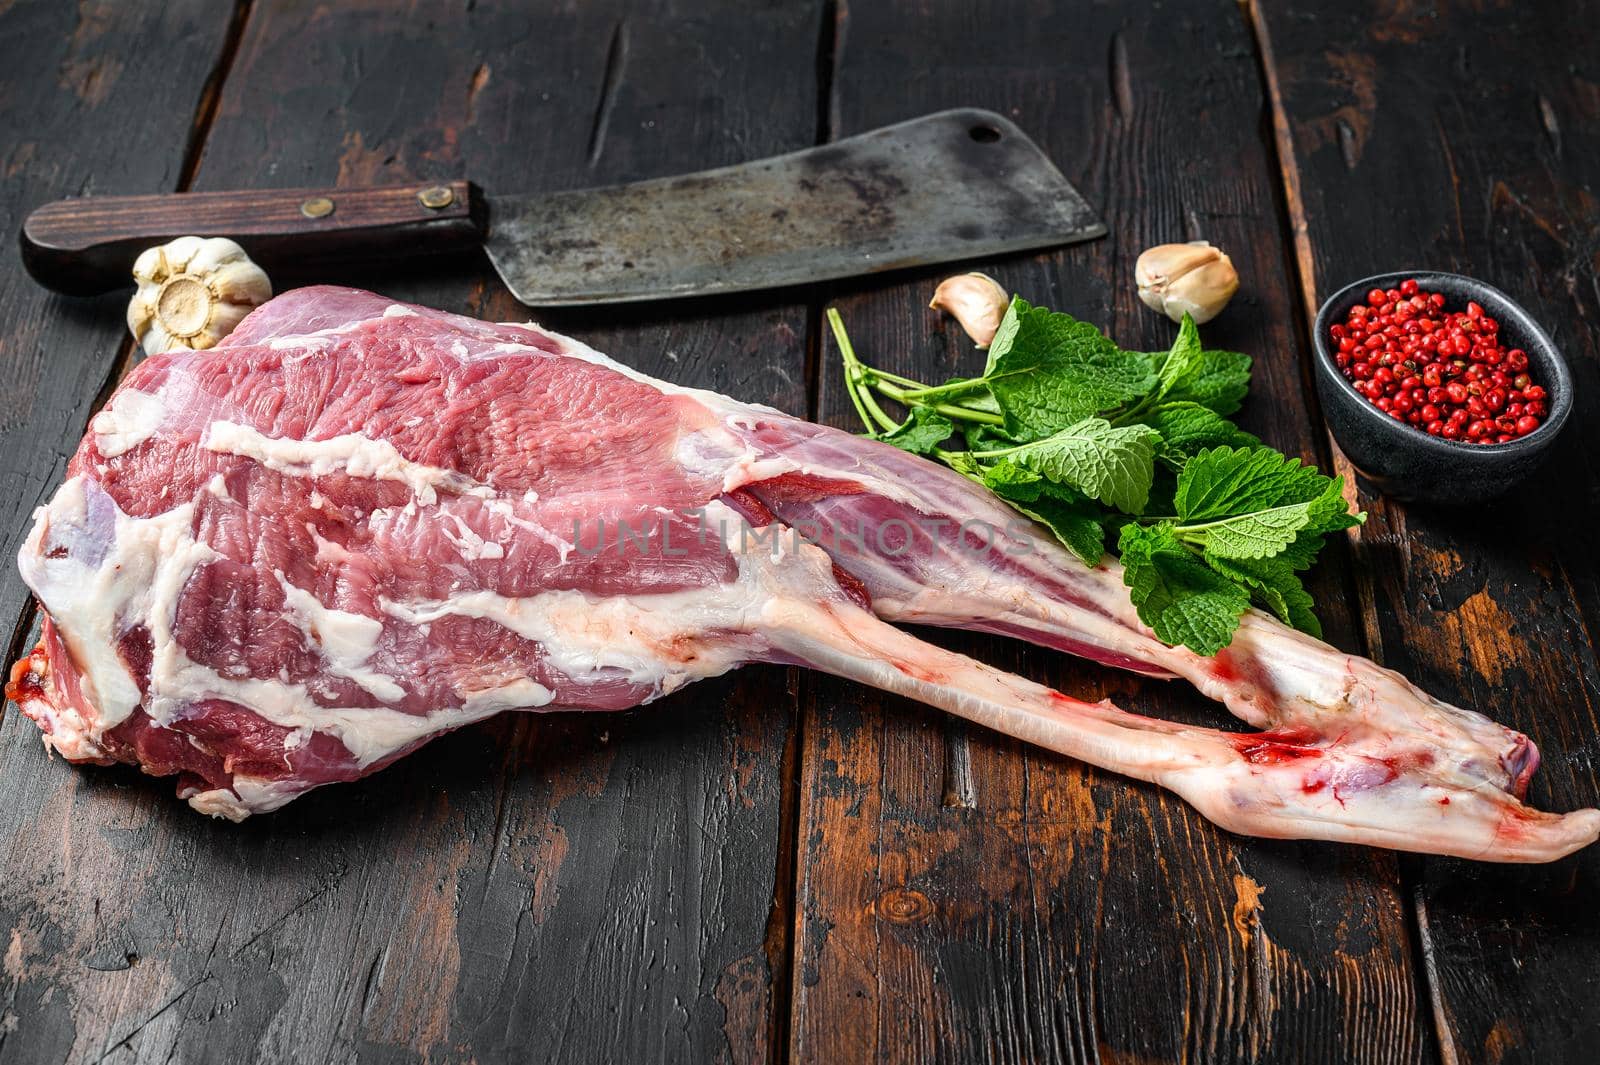 Whole raw leg of lamb. Fresh organic meat. Dark wooden background. Top view.